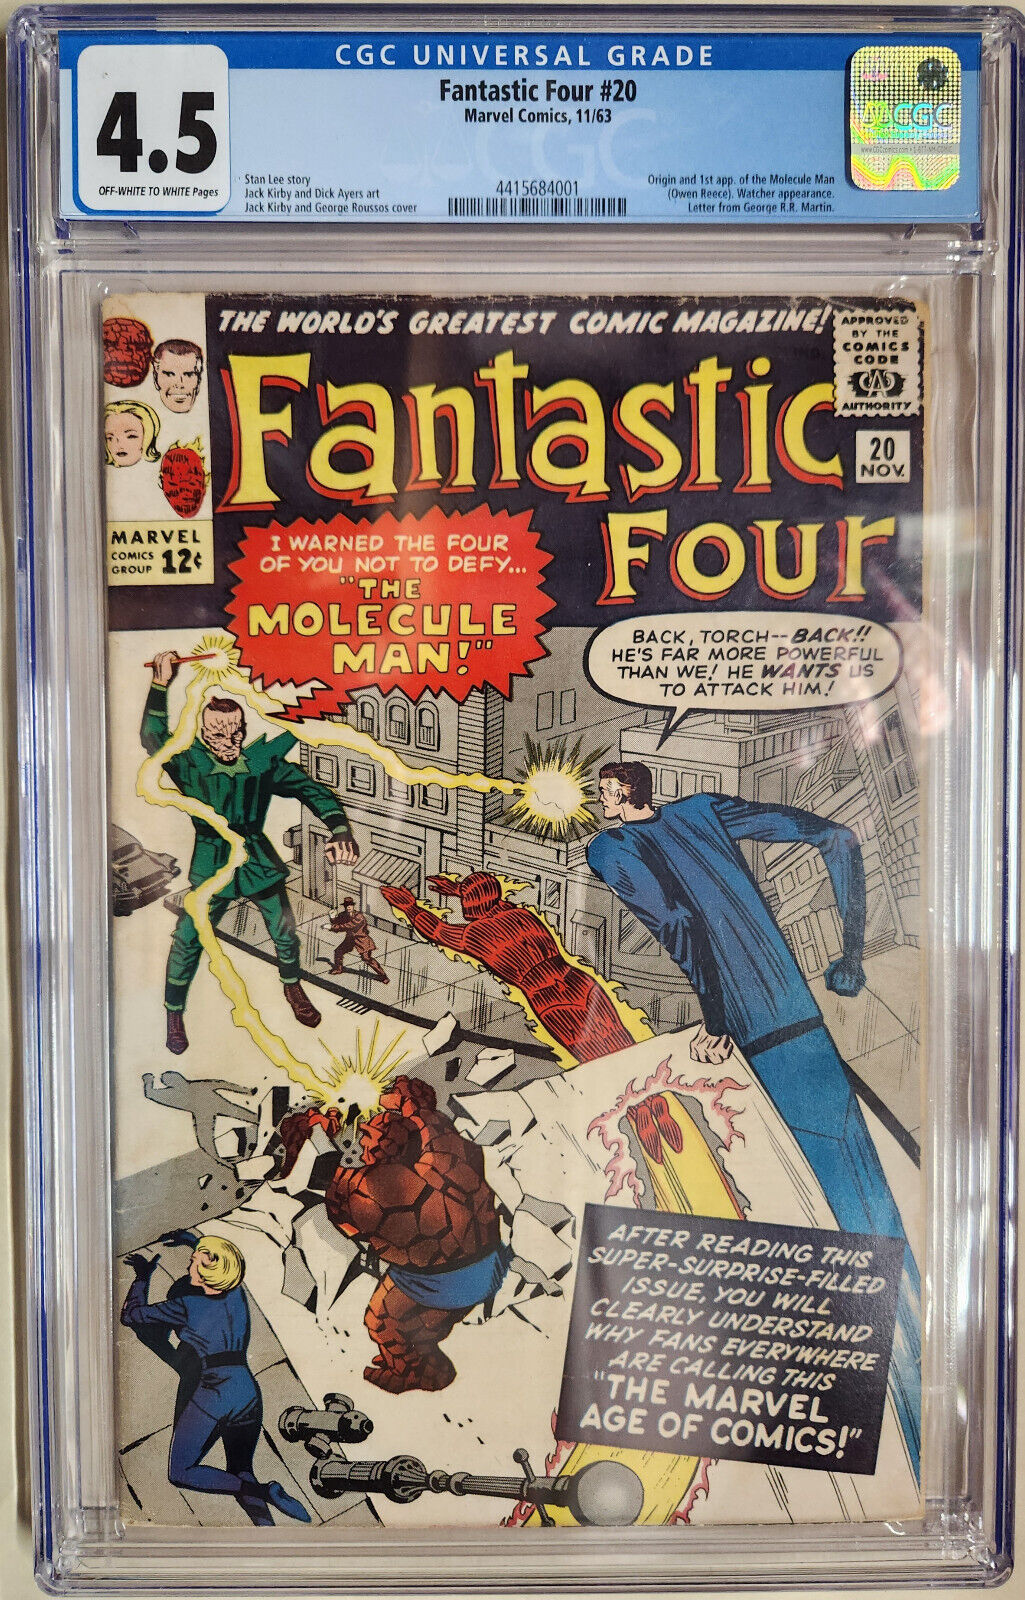 Fantastic Four #20 (1963) - CGC 4.5 - 1st Appearance of Molecule Man